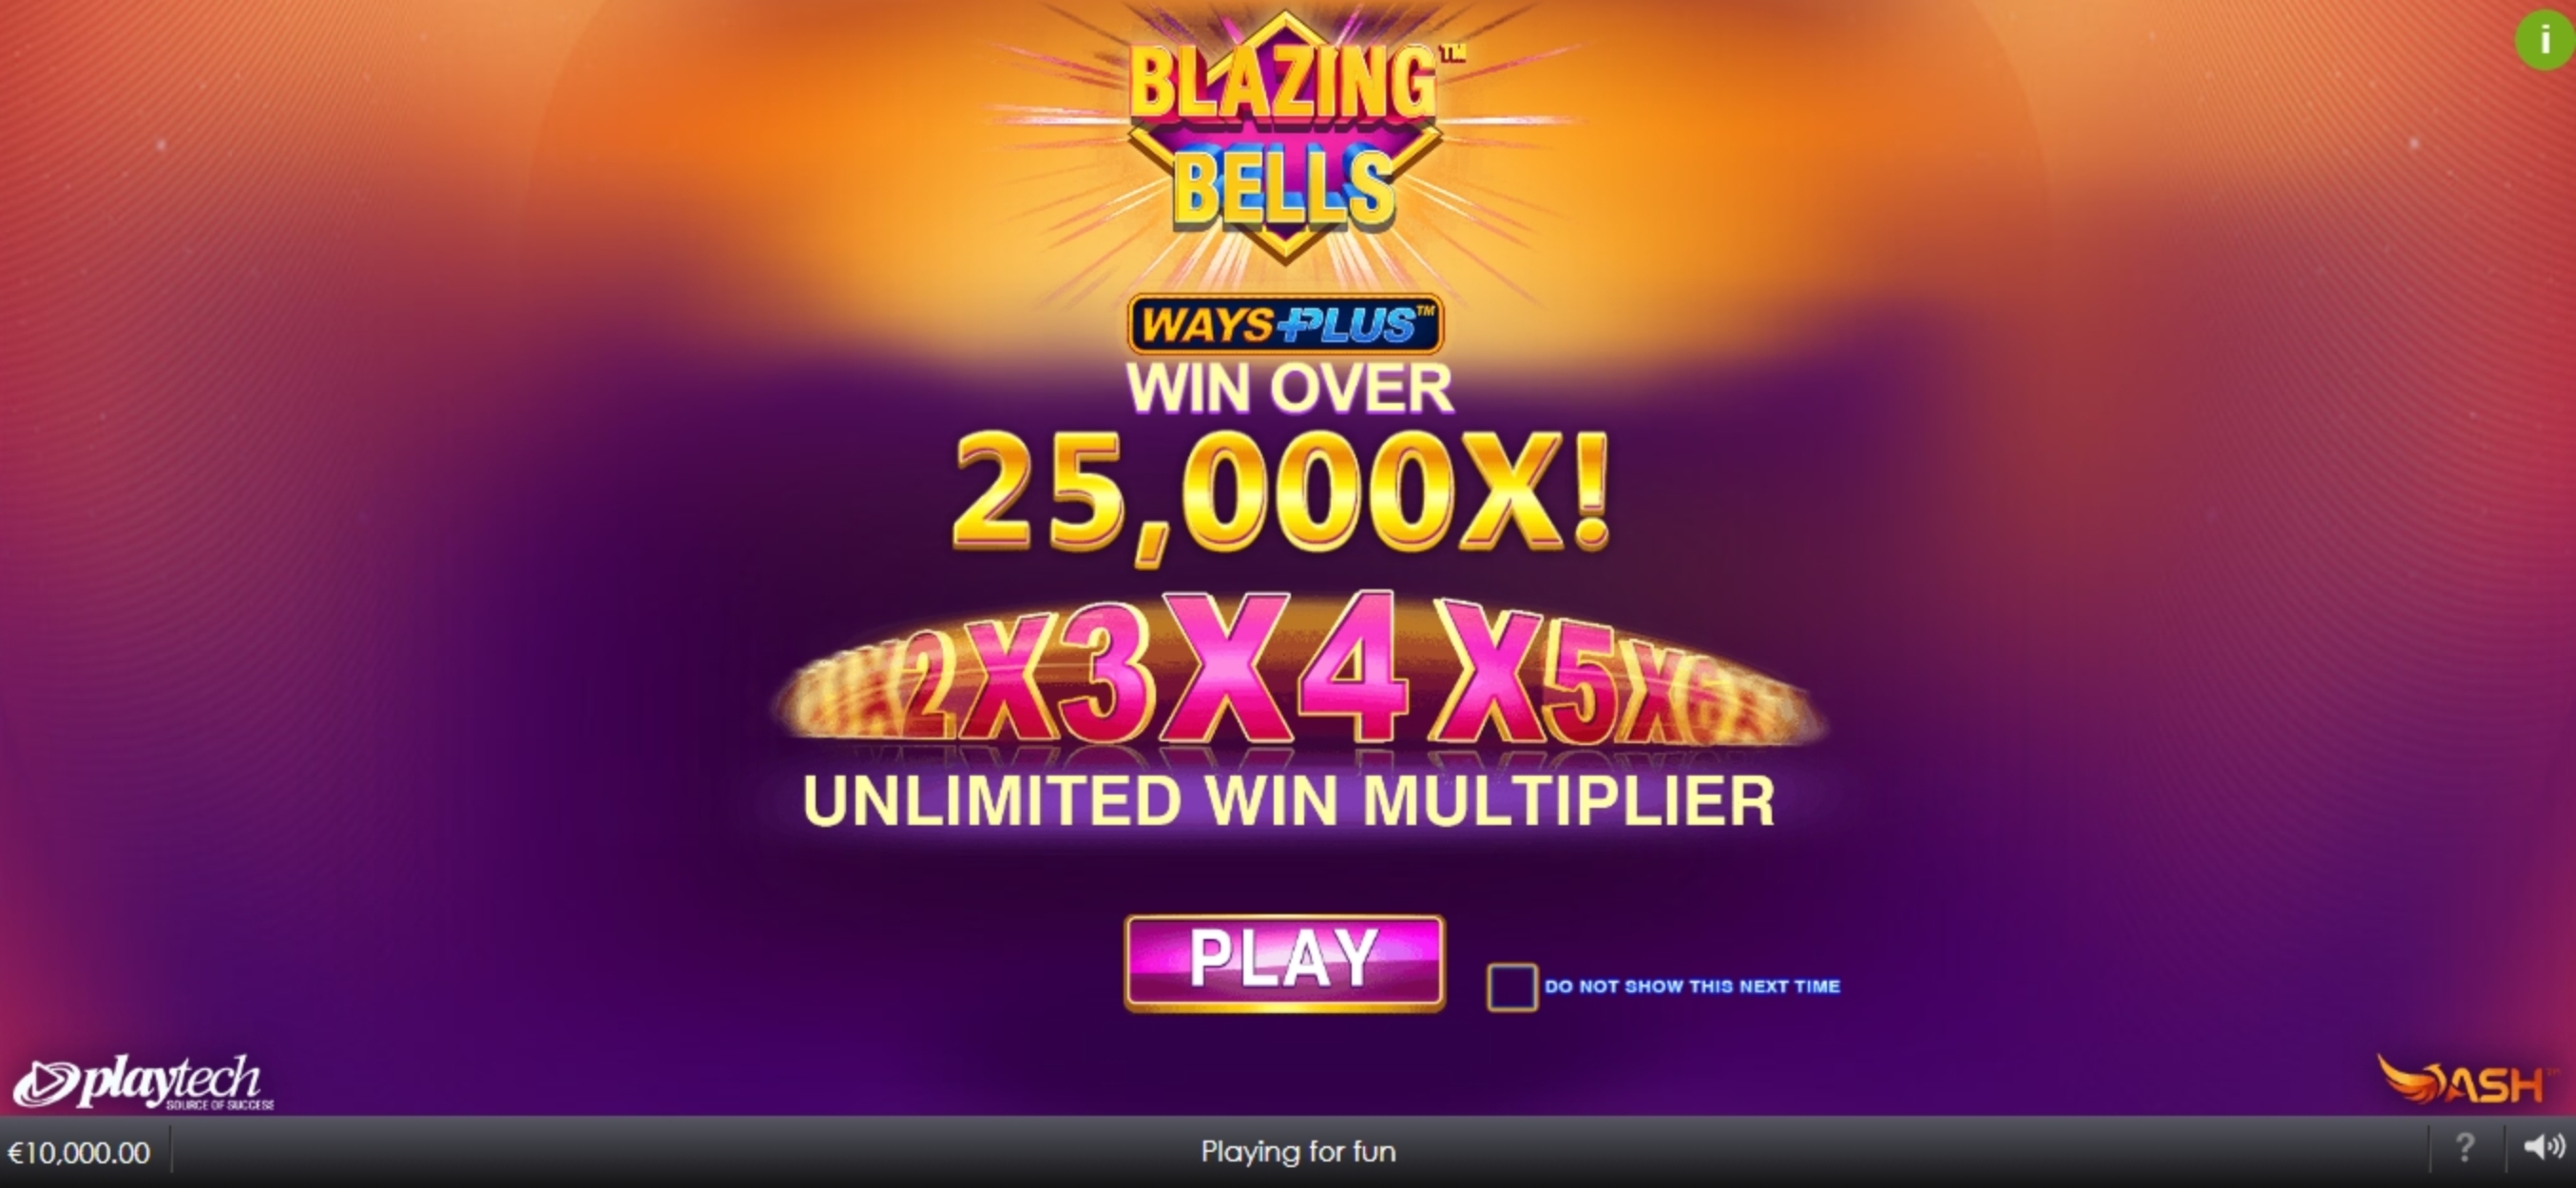 Play Blazing Bells Free Casino Slot Game by Ash Gaming